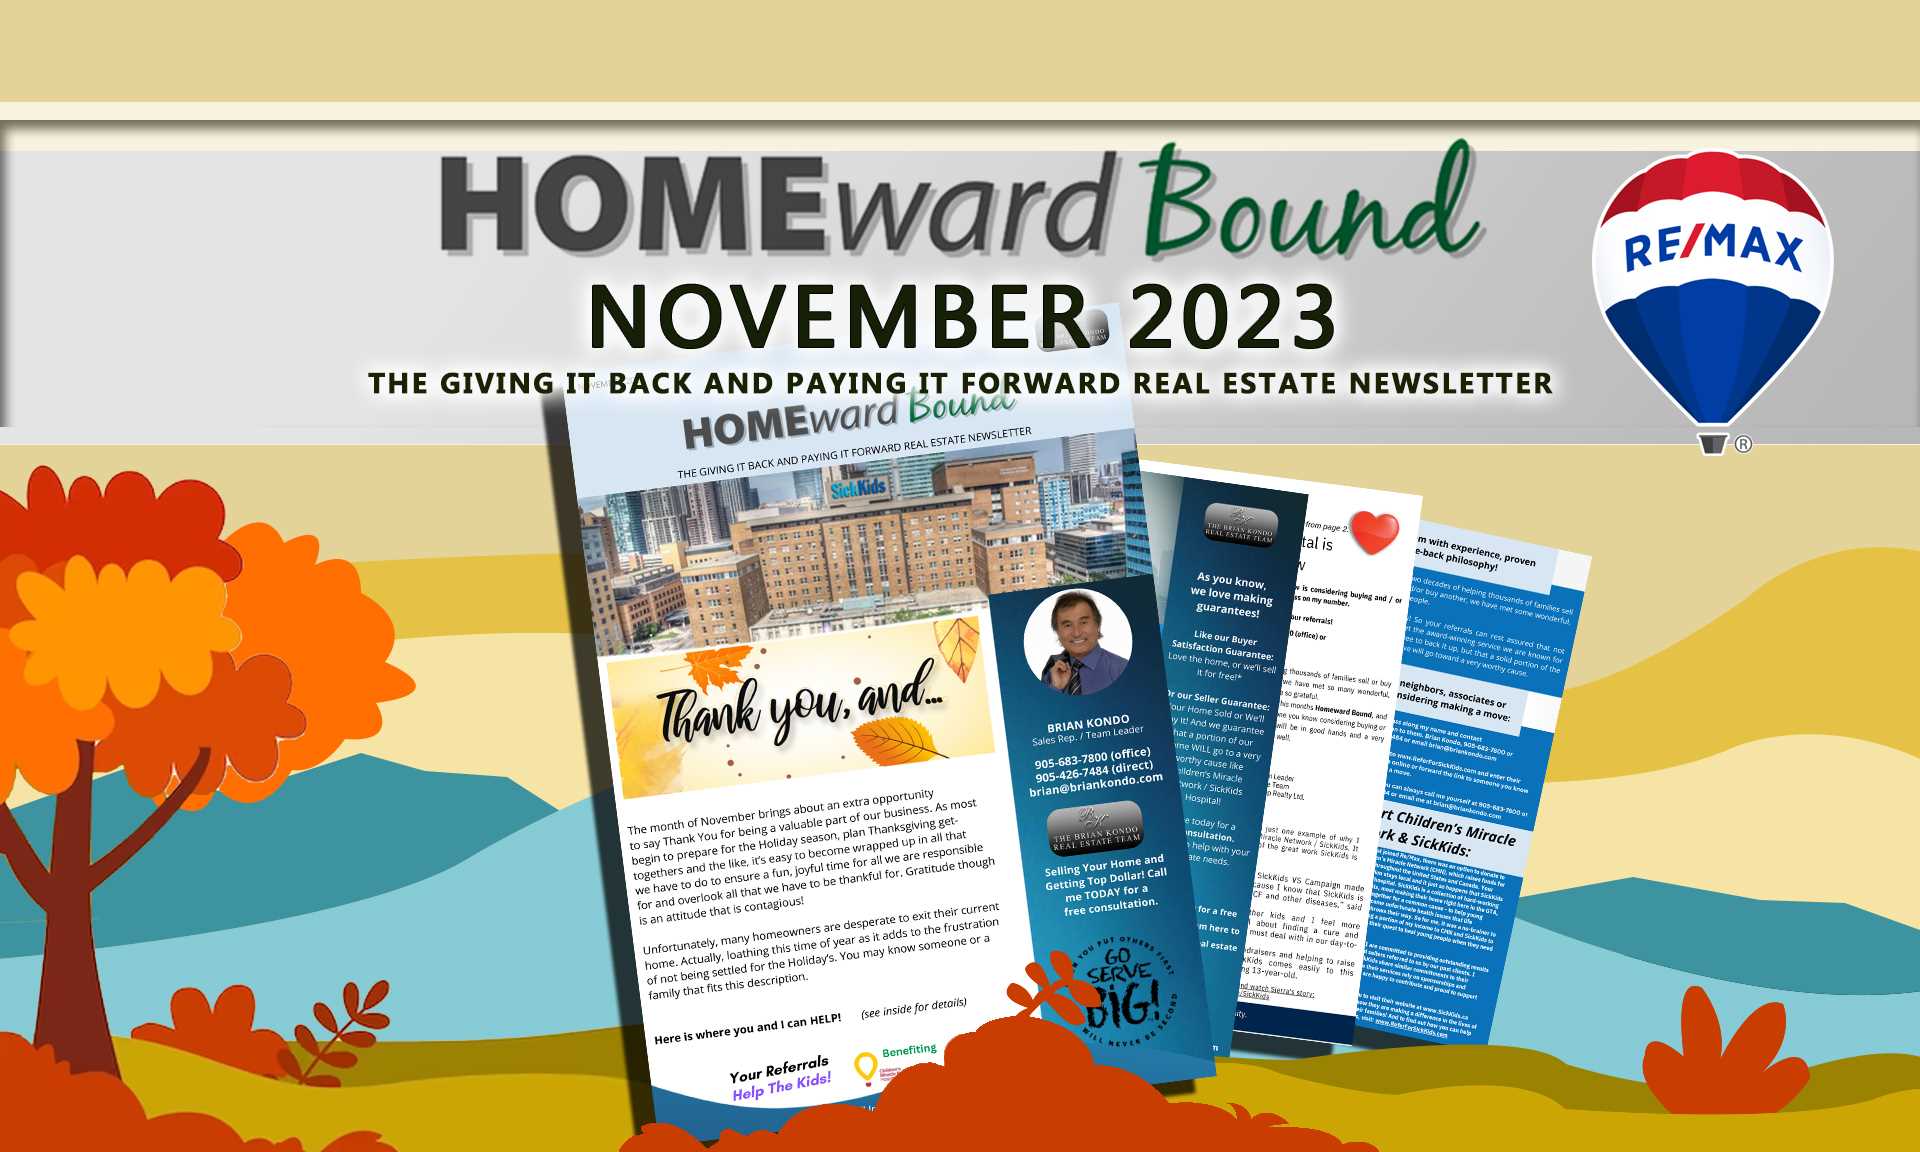 Homeward Bound Newsletter November 2023 | The Brian Kondo Real Estate Team